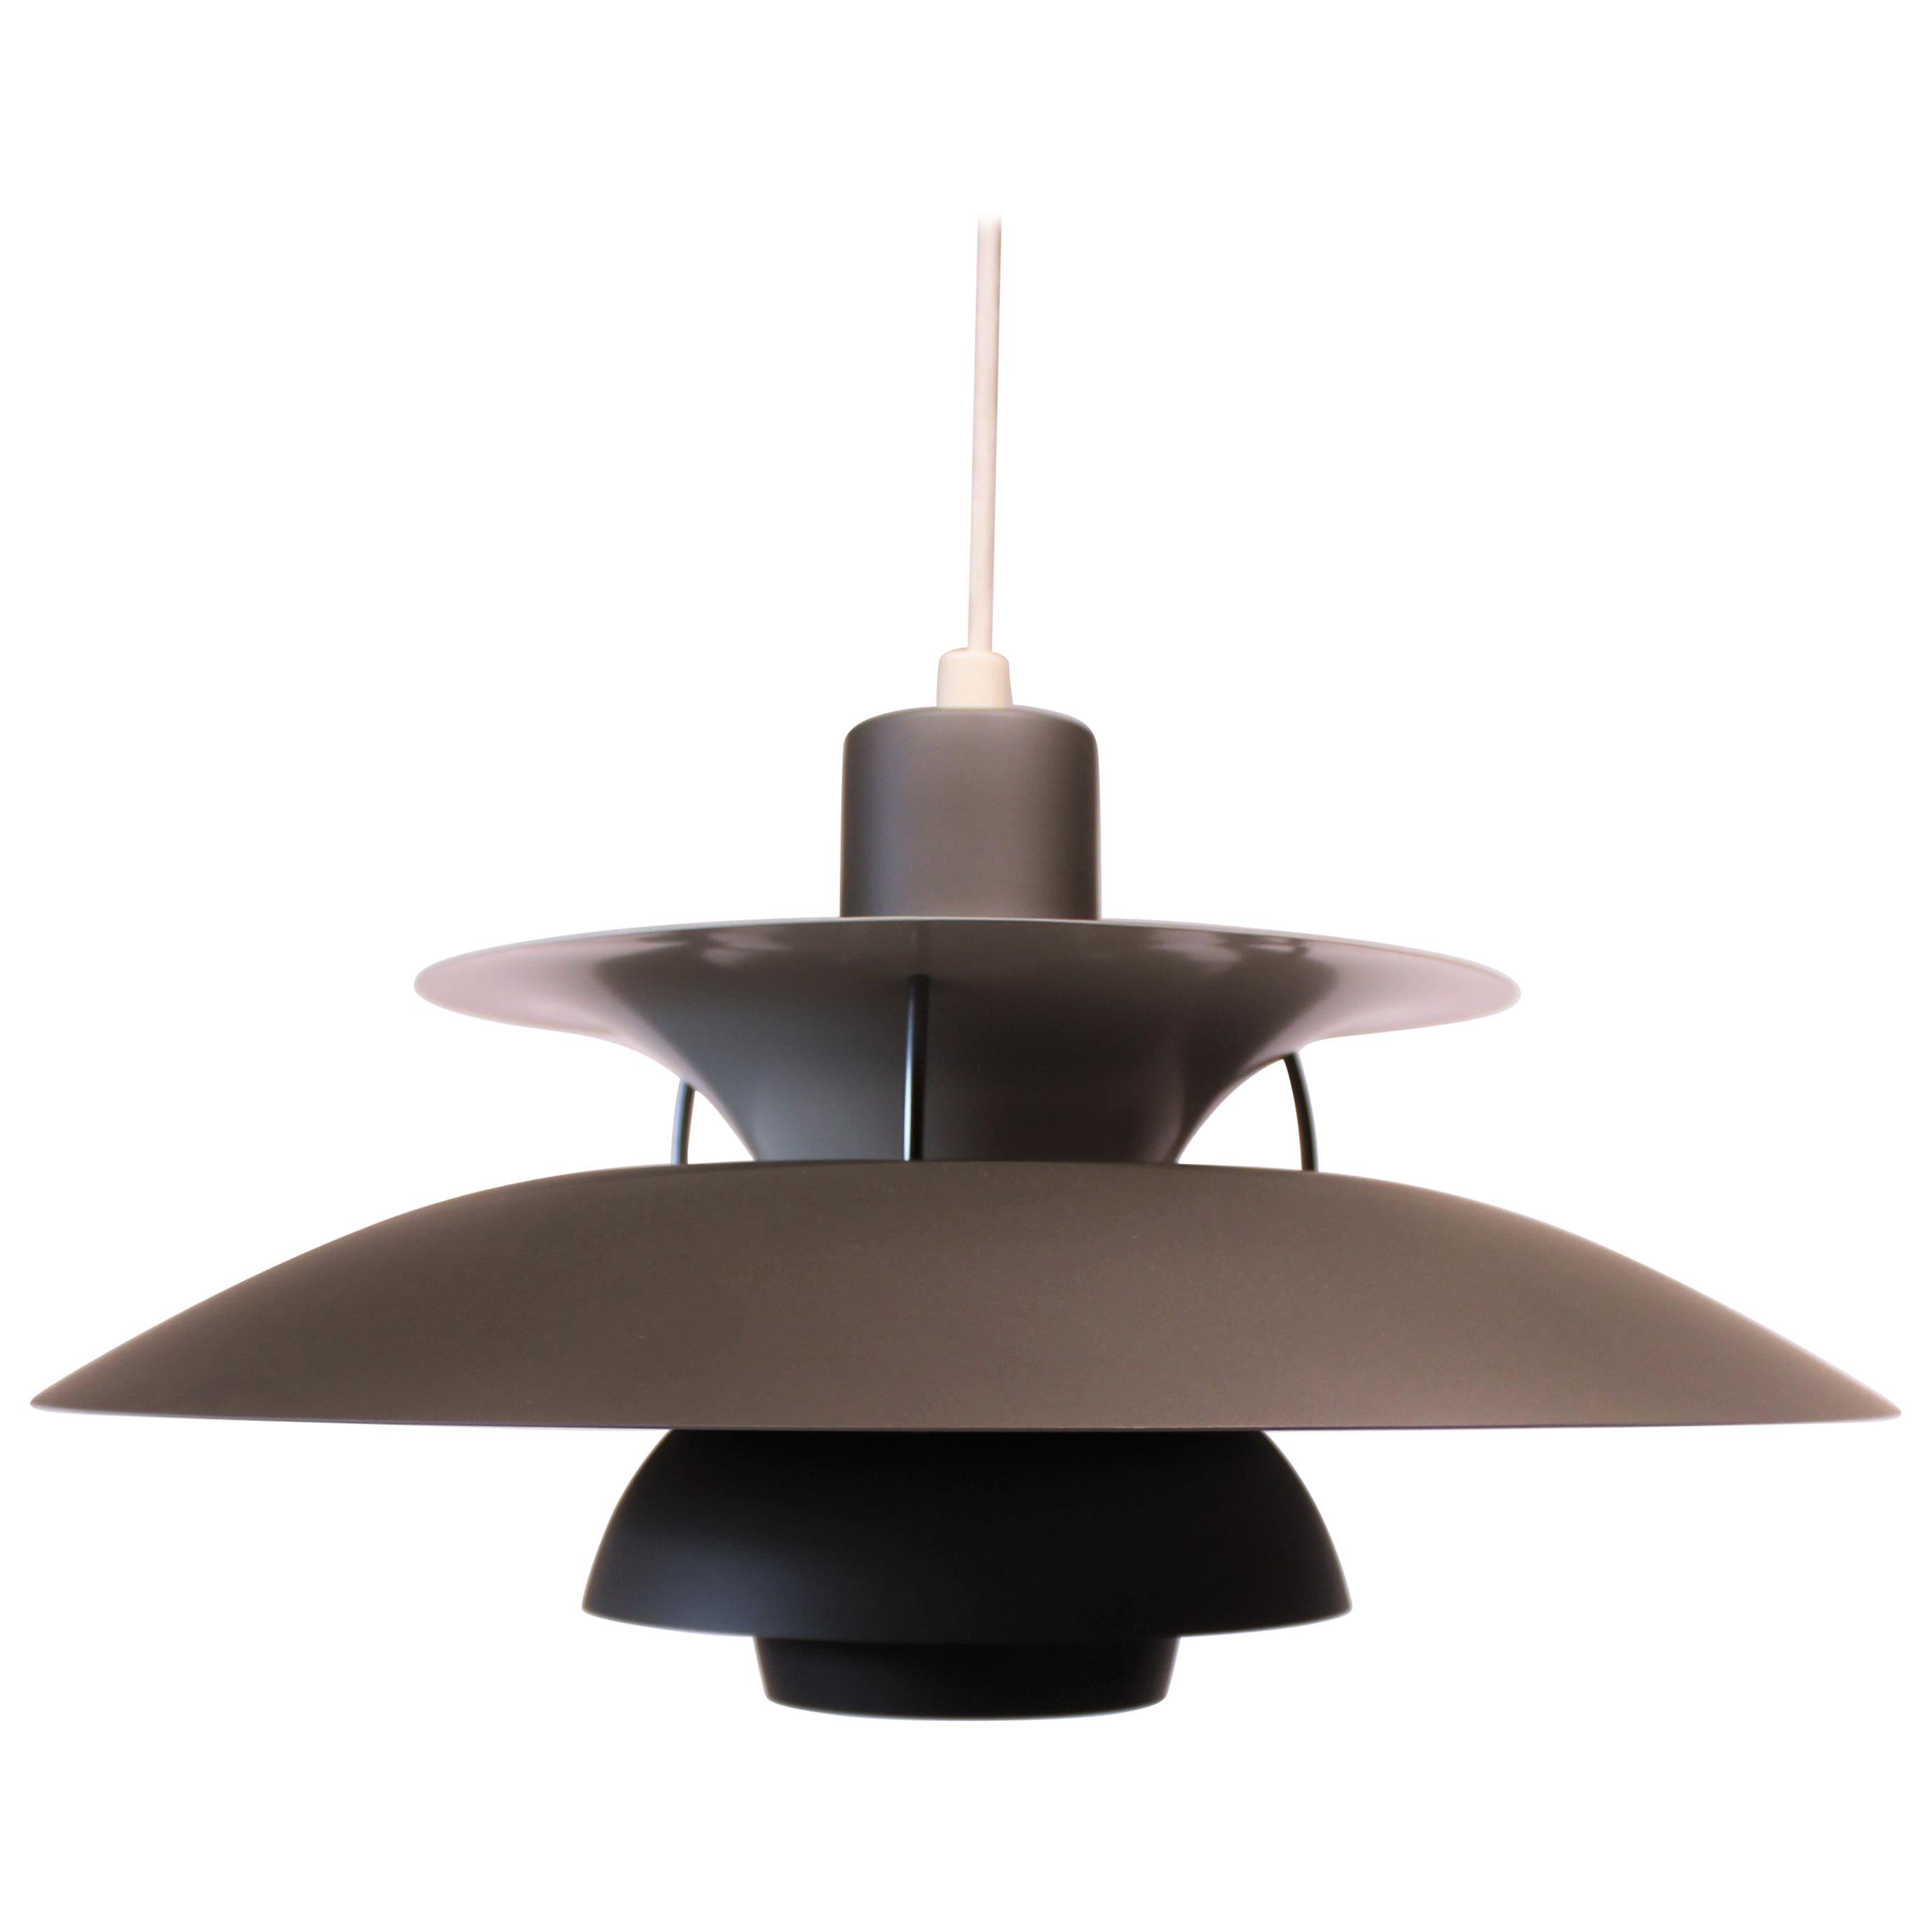 PH5 Pendant in Dark Grey Designed by Poul Henningsen